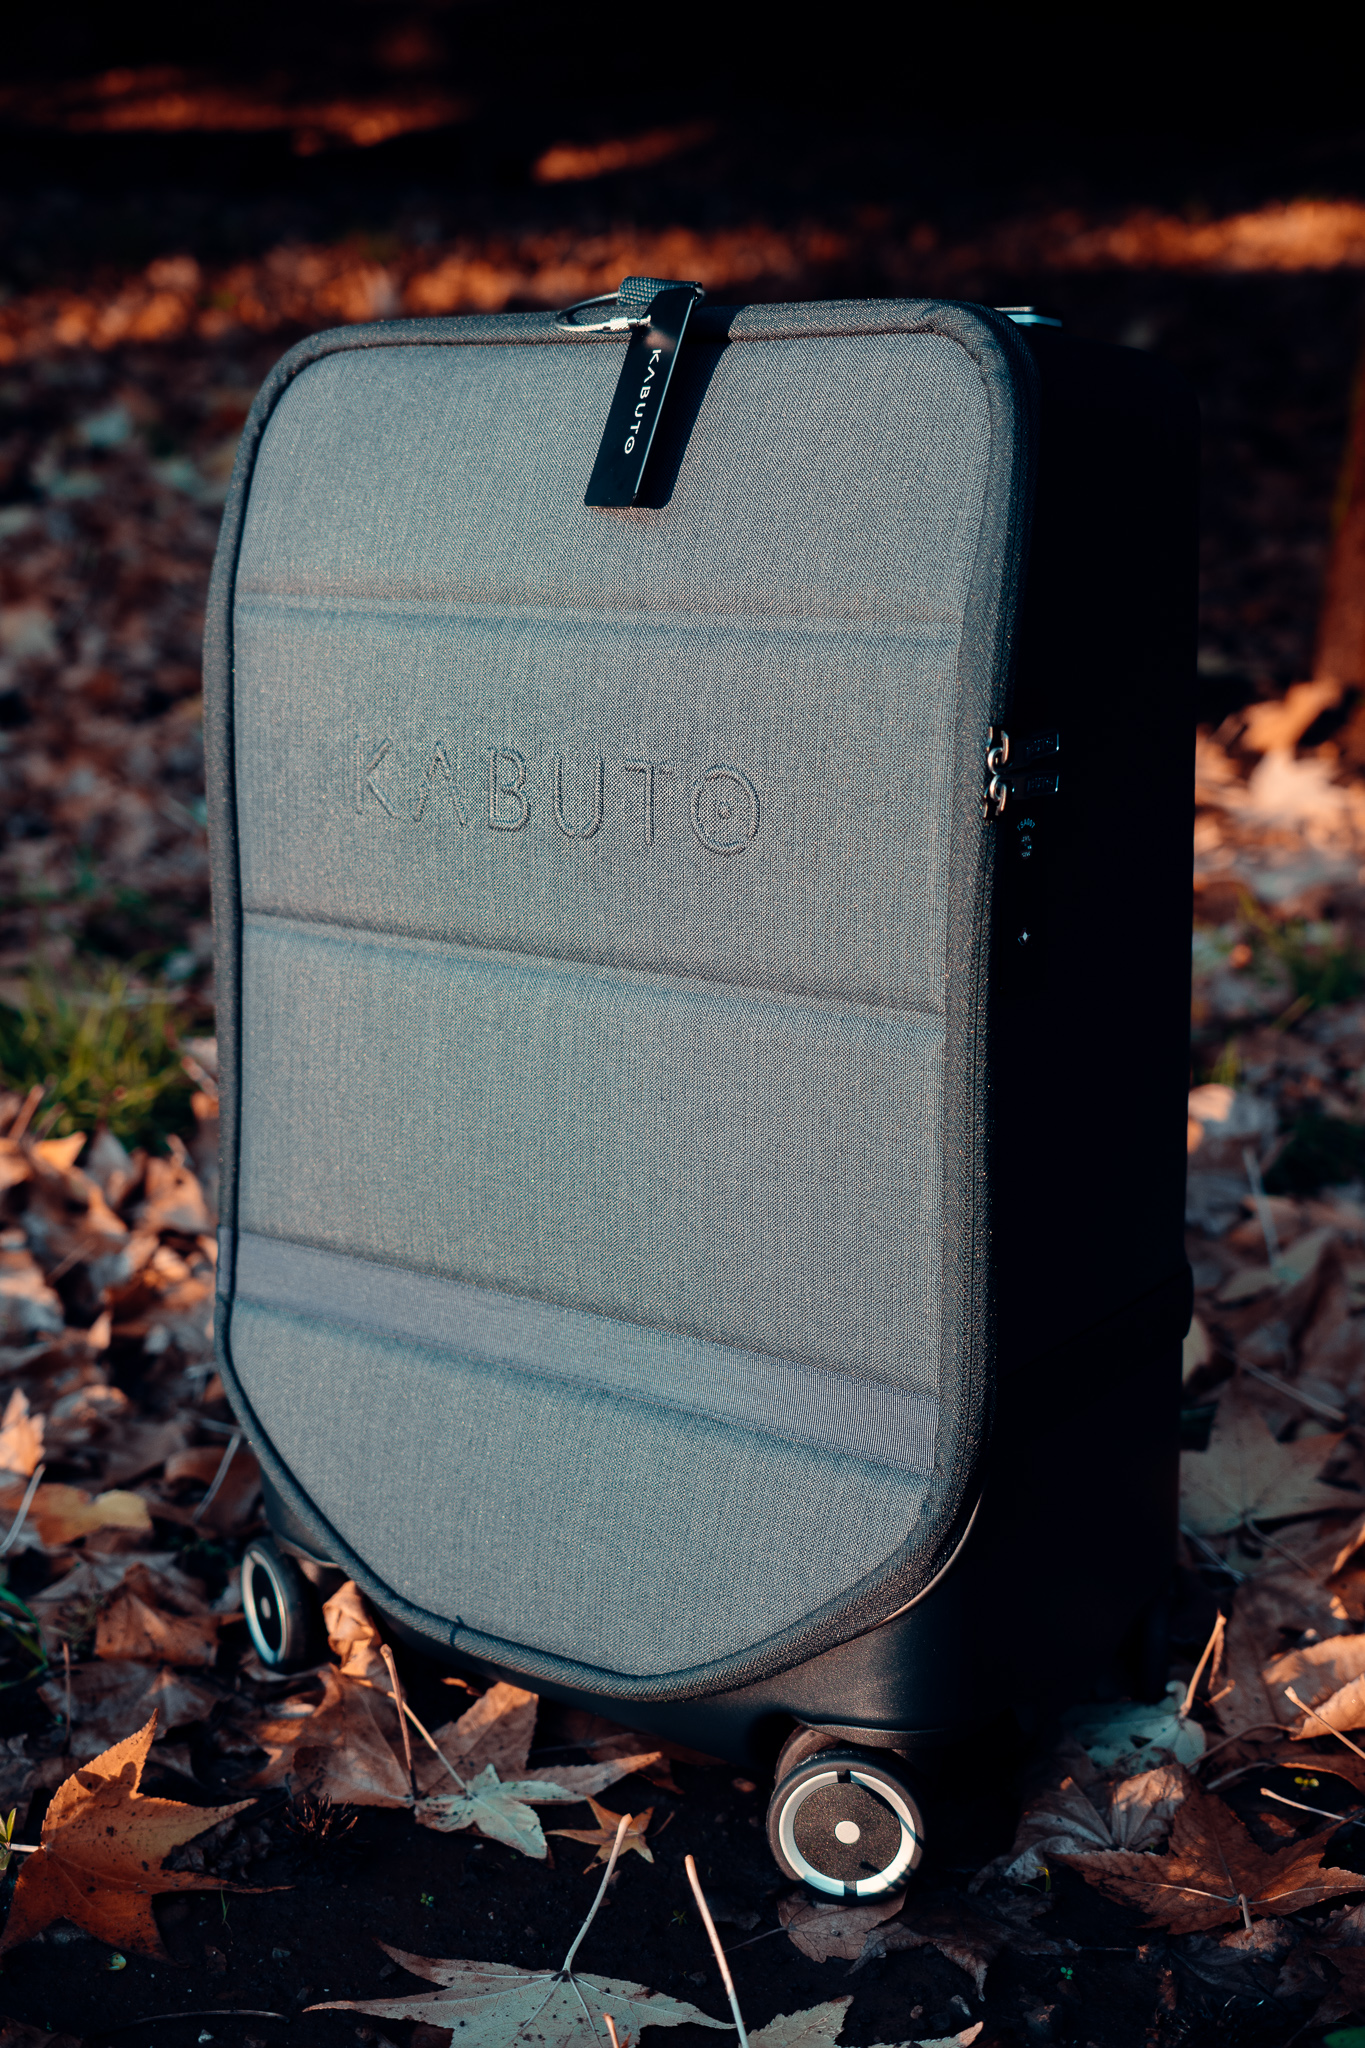 Kabuto NOMAD: Smart Expandable 2-Wheel Carry-on